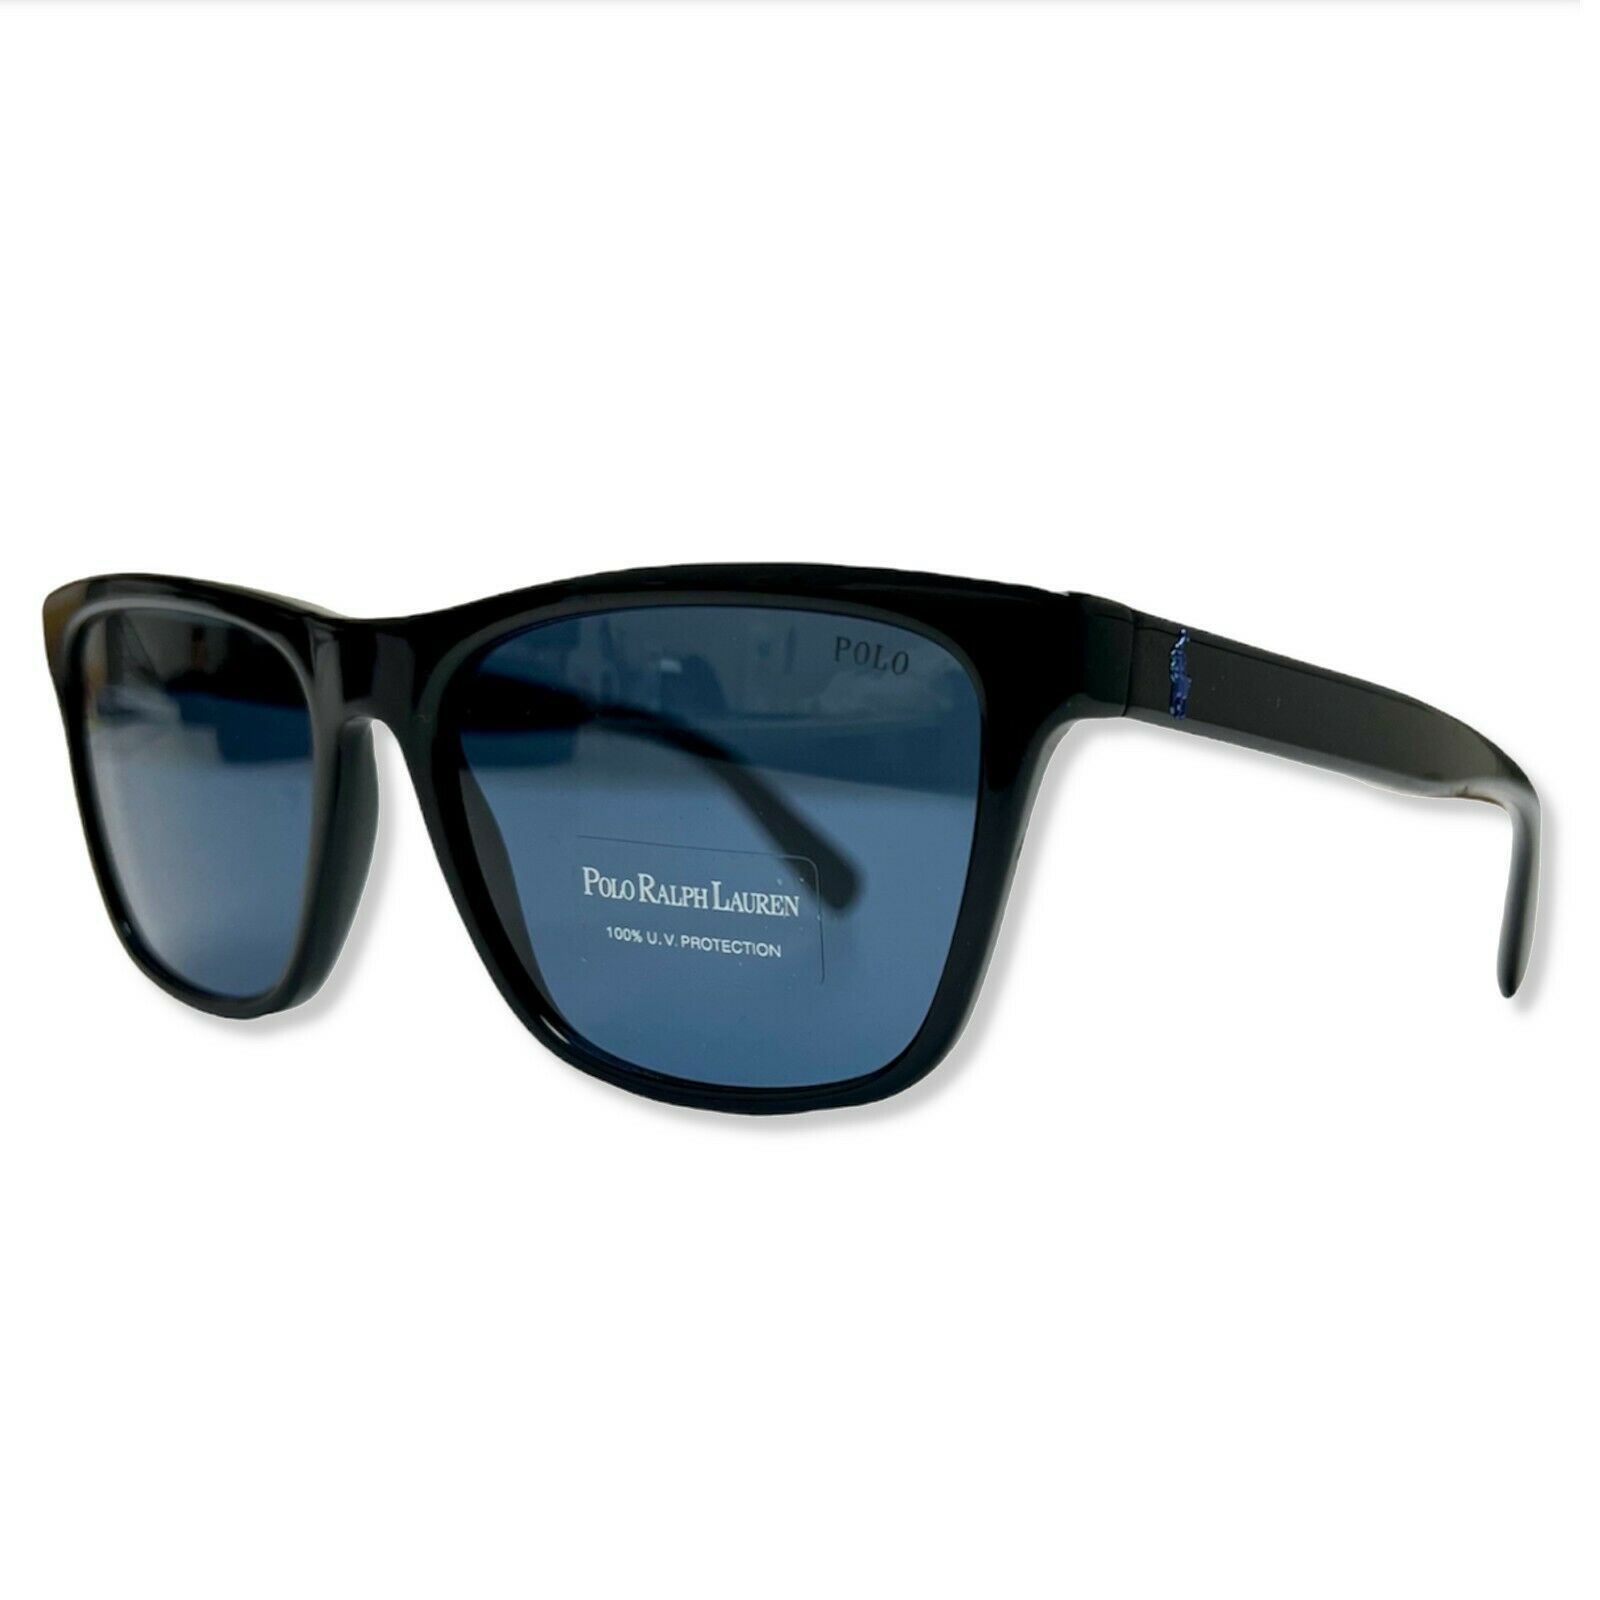 Polo Ralph Lauren Mens Black Dark Blue Sunglasses PH4167 with UV Protection New